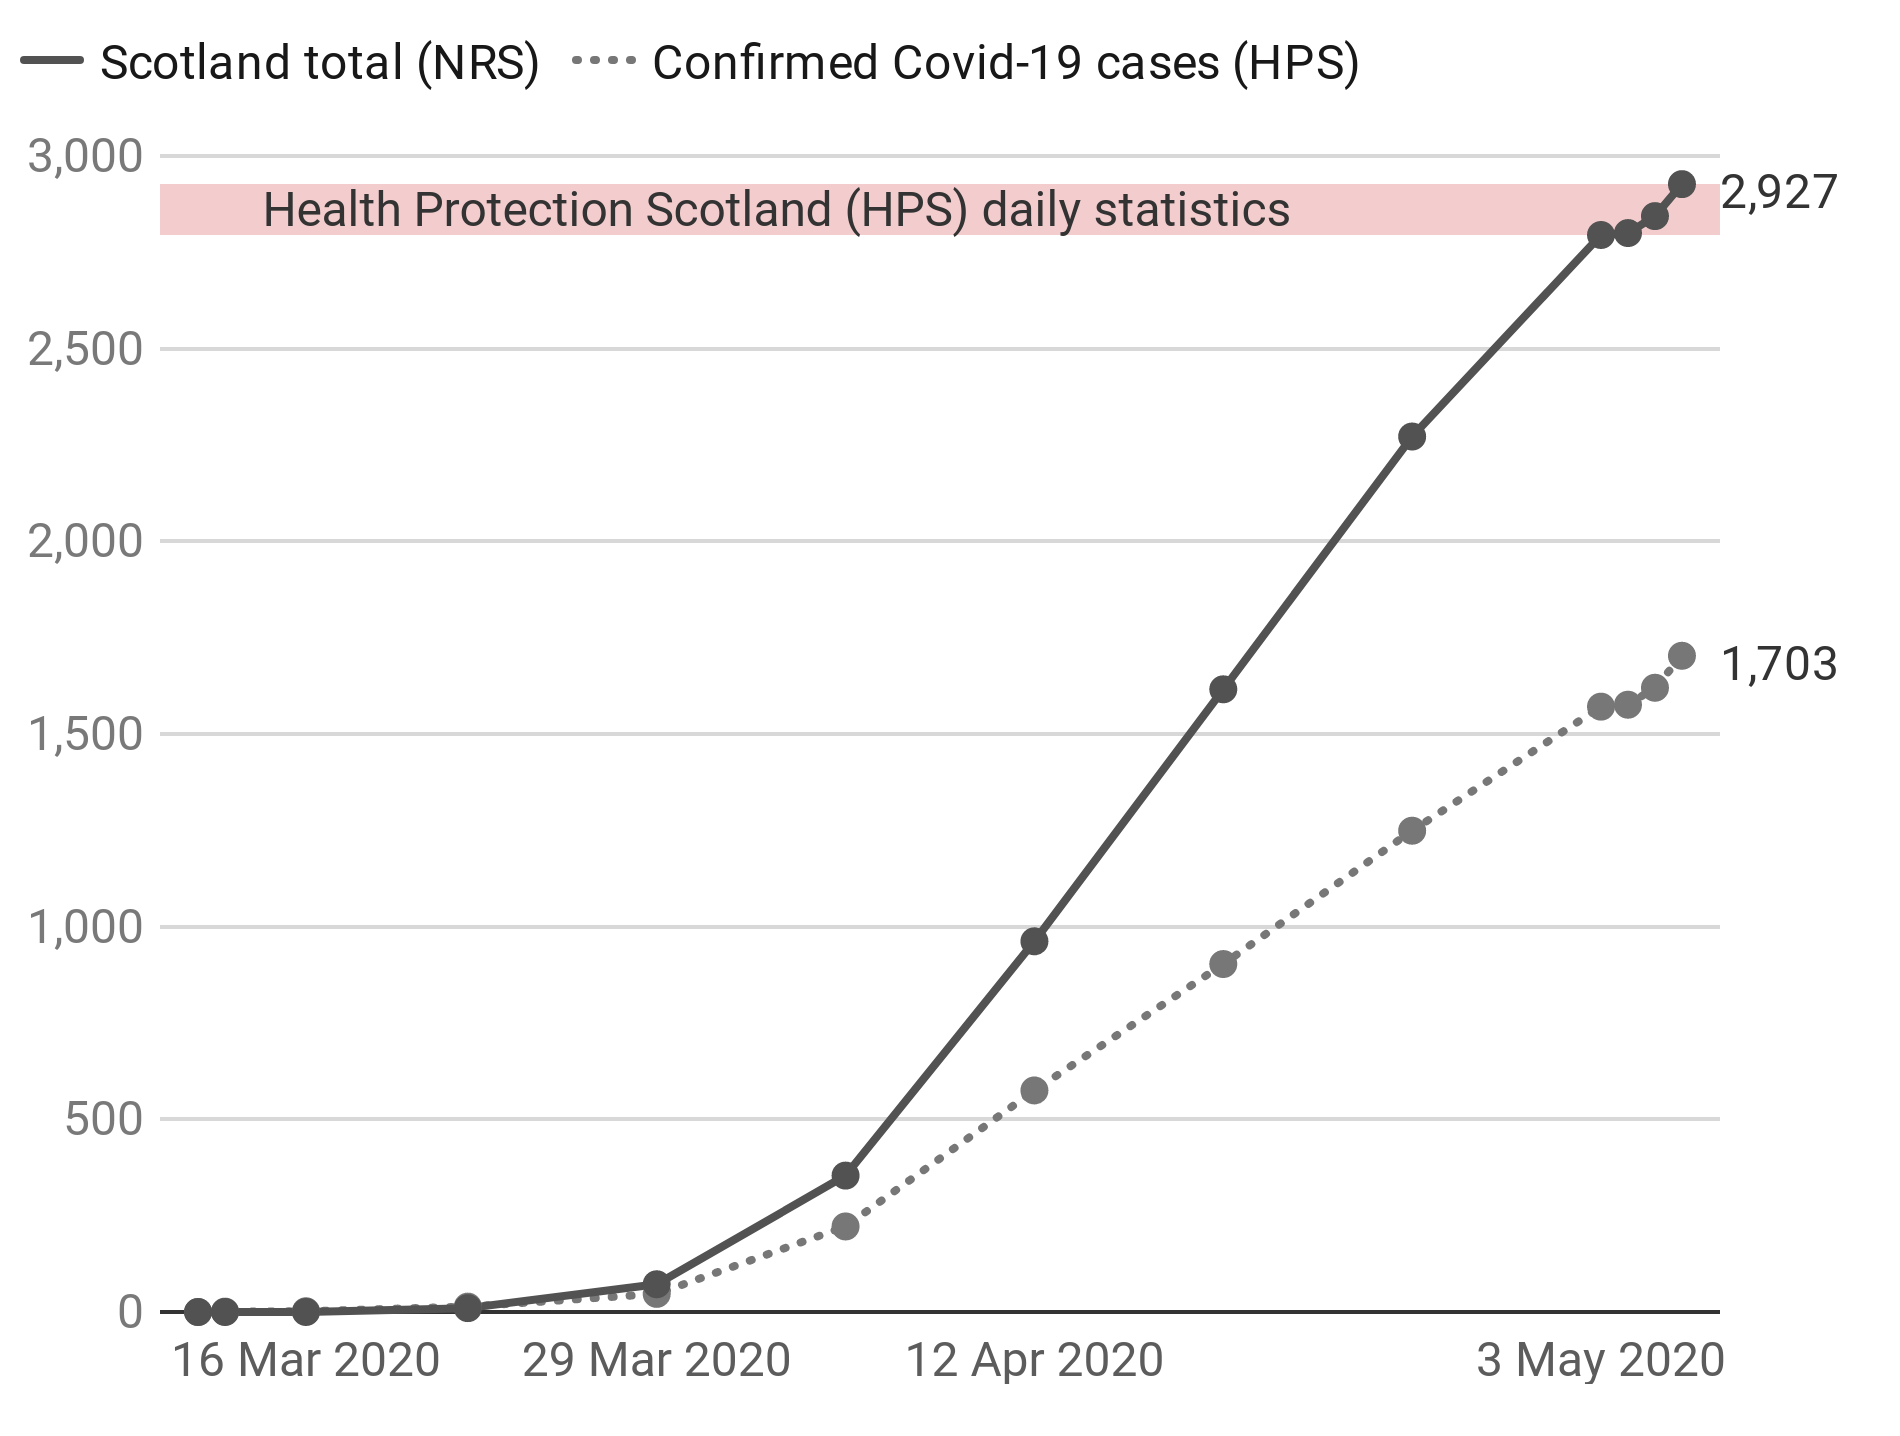     Chart: STV News  -  Source: National Records of Scotland / Health Protection Scotland   